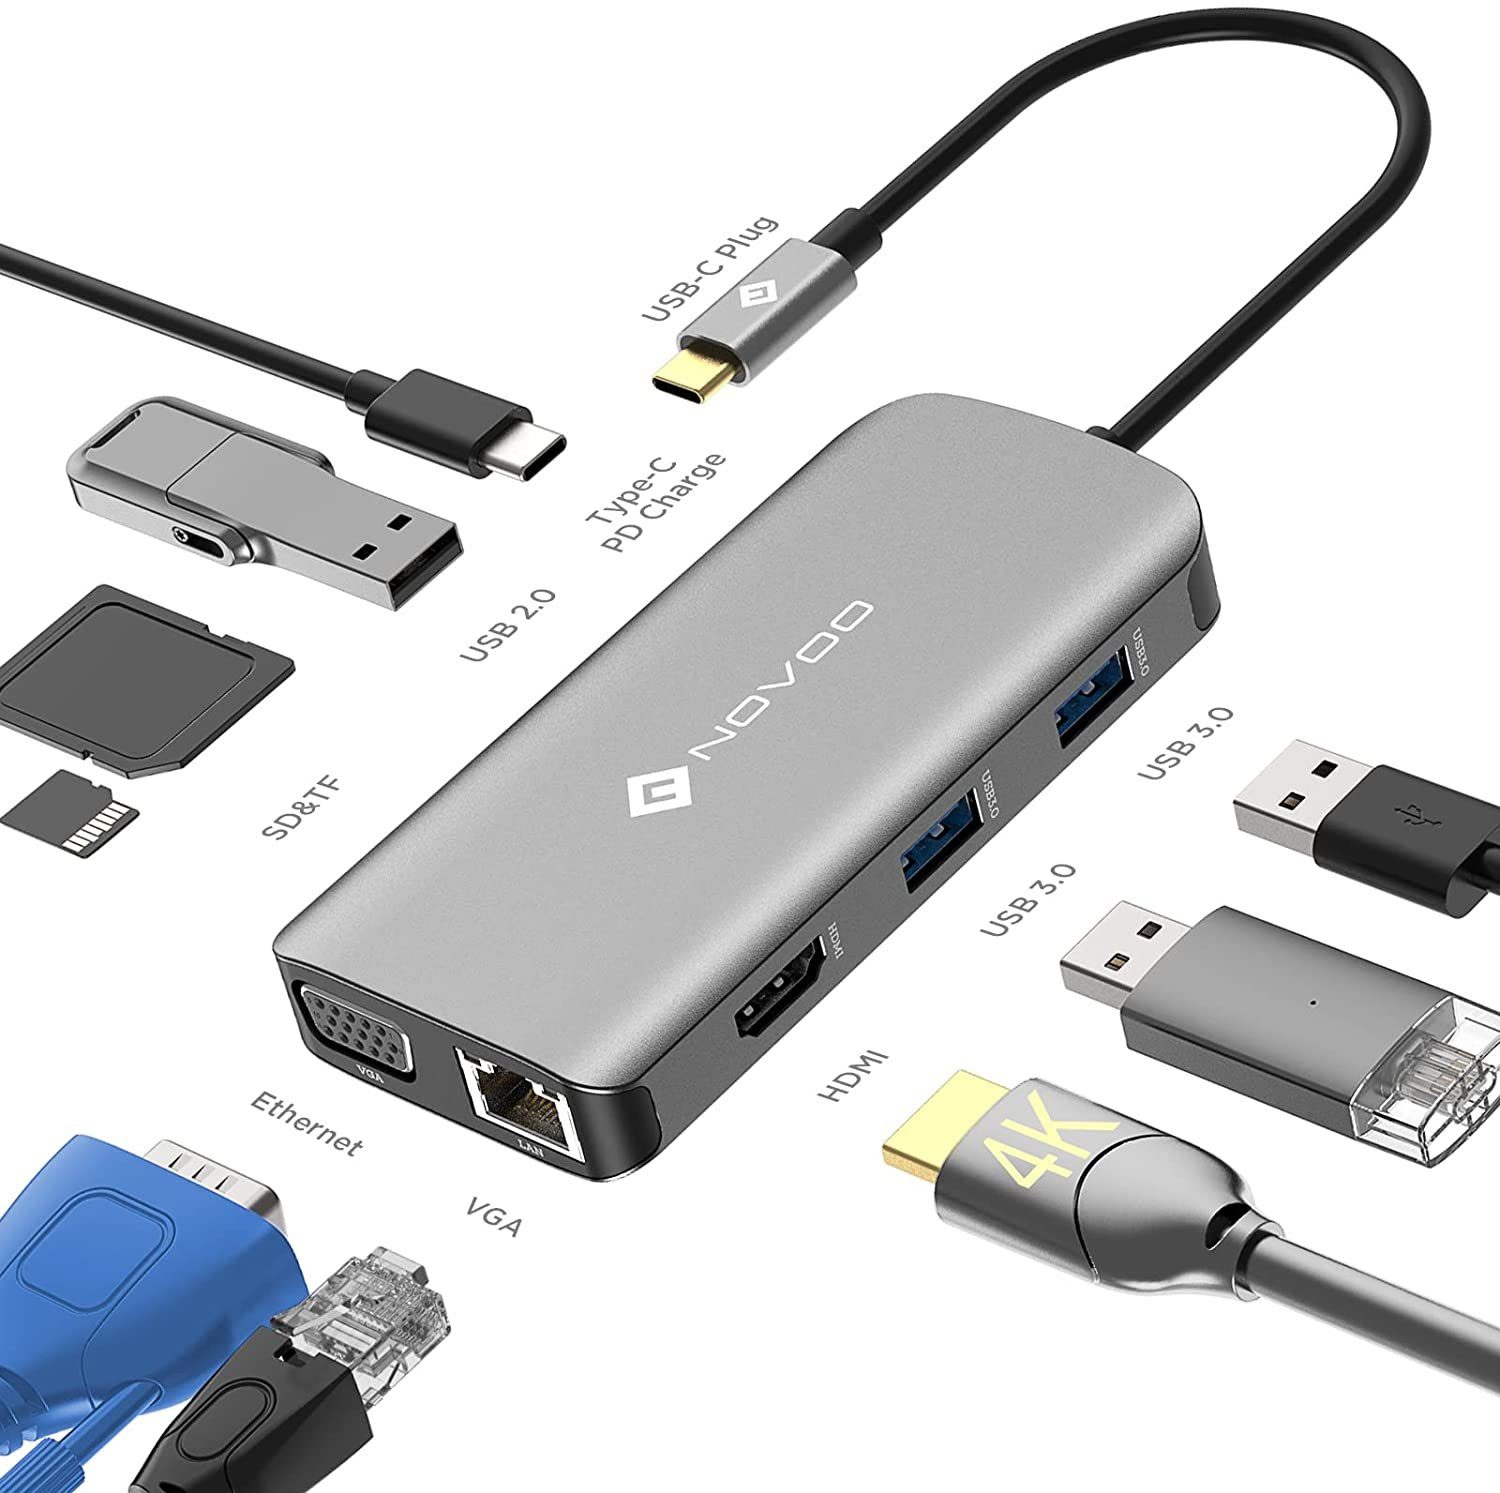 NOVOO »11 in 1« USB-Adapter USB-C zu 2xUSB 3.0, Type-C PD Charge, VGA,  Ethernet, 2xHDMI, SD&TF, 2xUSB 2.0, Docking Station 2 HDMI, NOVOO 11-in-1  USB C Hub 4 k 30Hz Triple Display